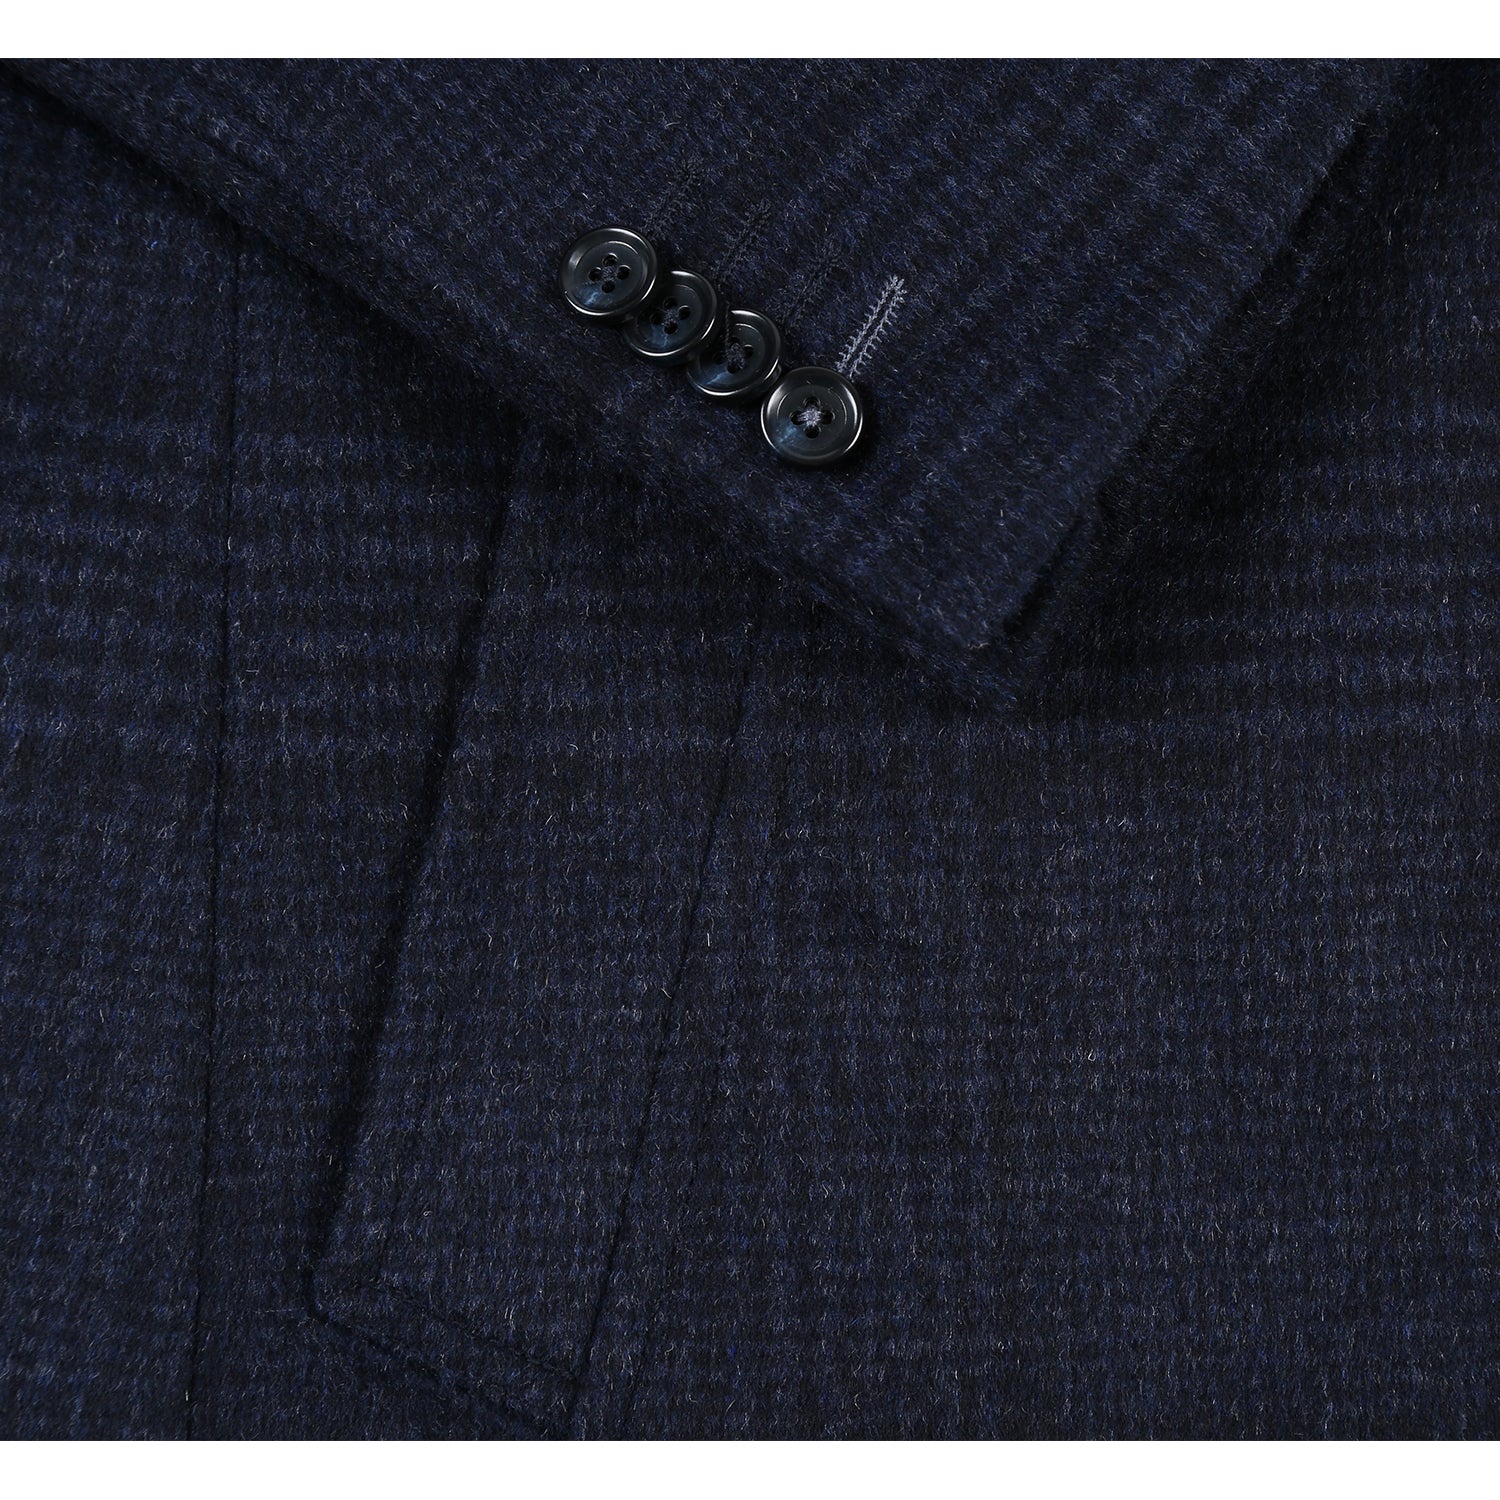 English Laundry Wool Blend Breasted Gray Blue Top Coat BIB 6